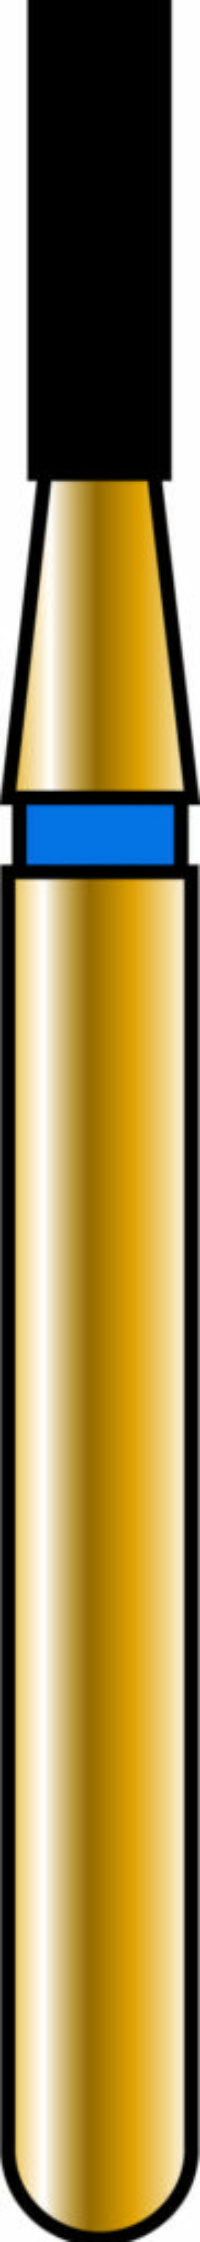 Flat End Cylinder 12-4mm Gold Diamond Bur